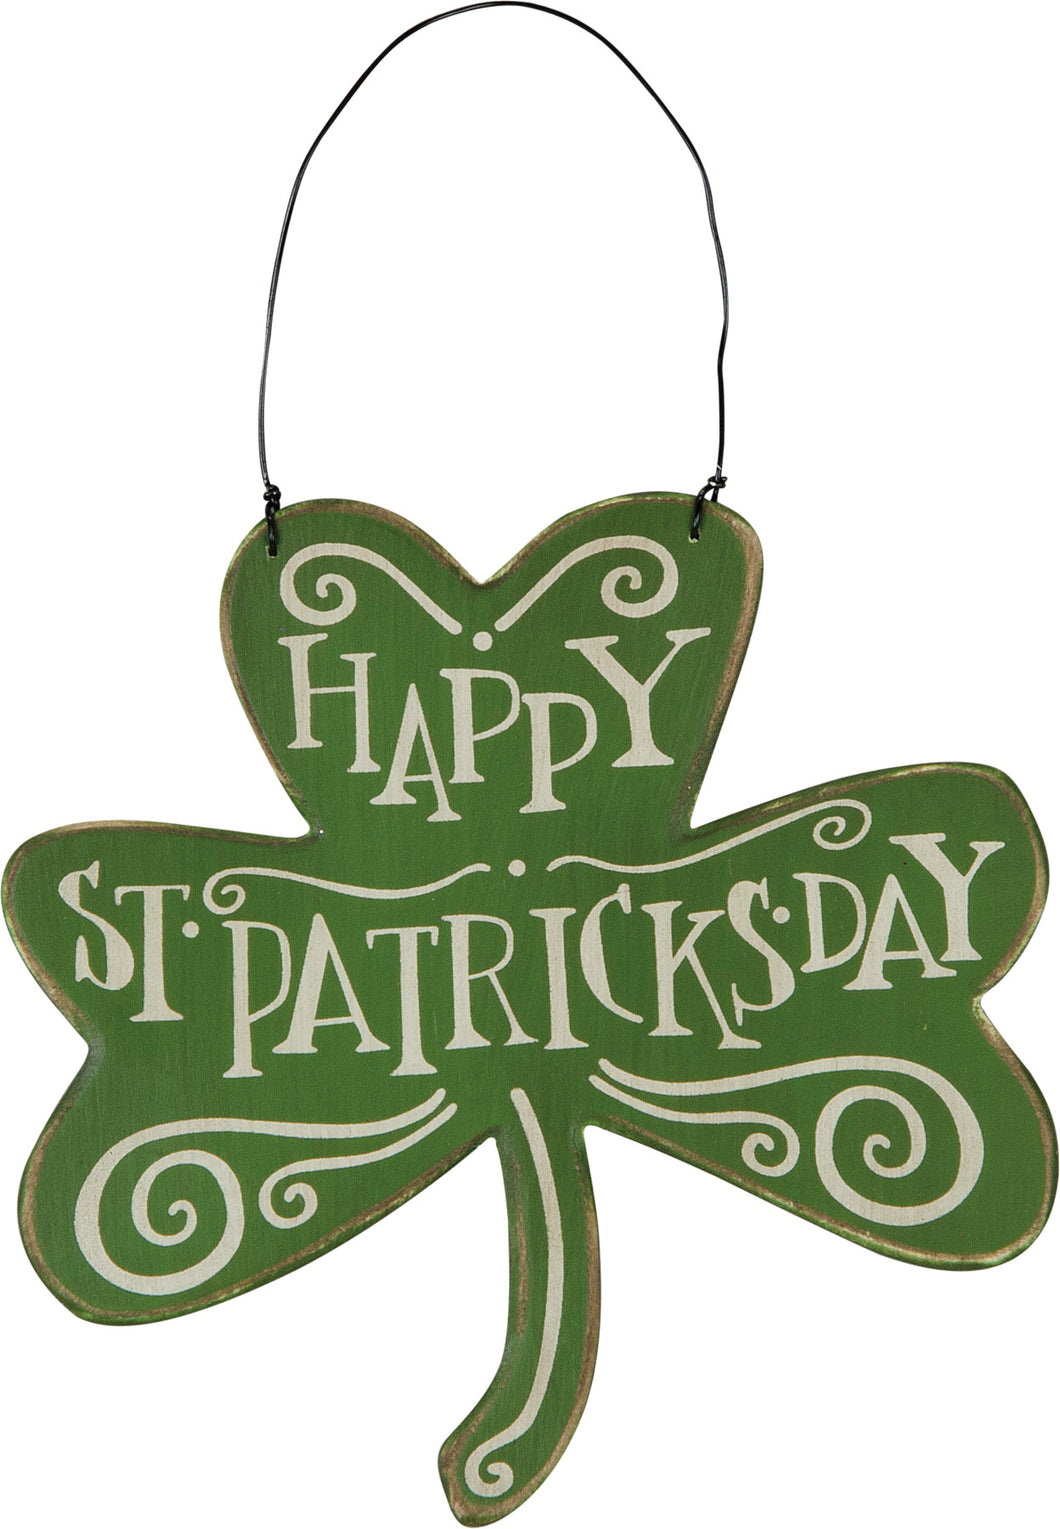 St. Patrick's Day Ornament